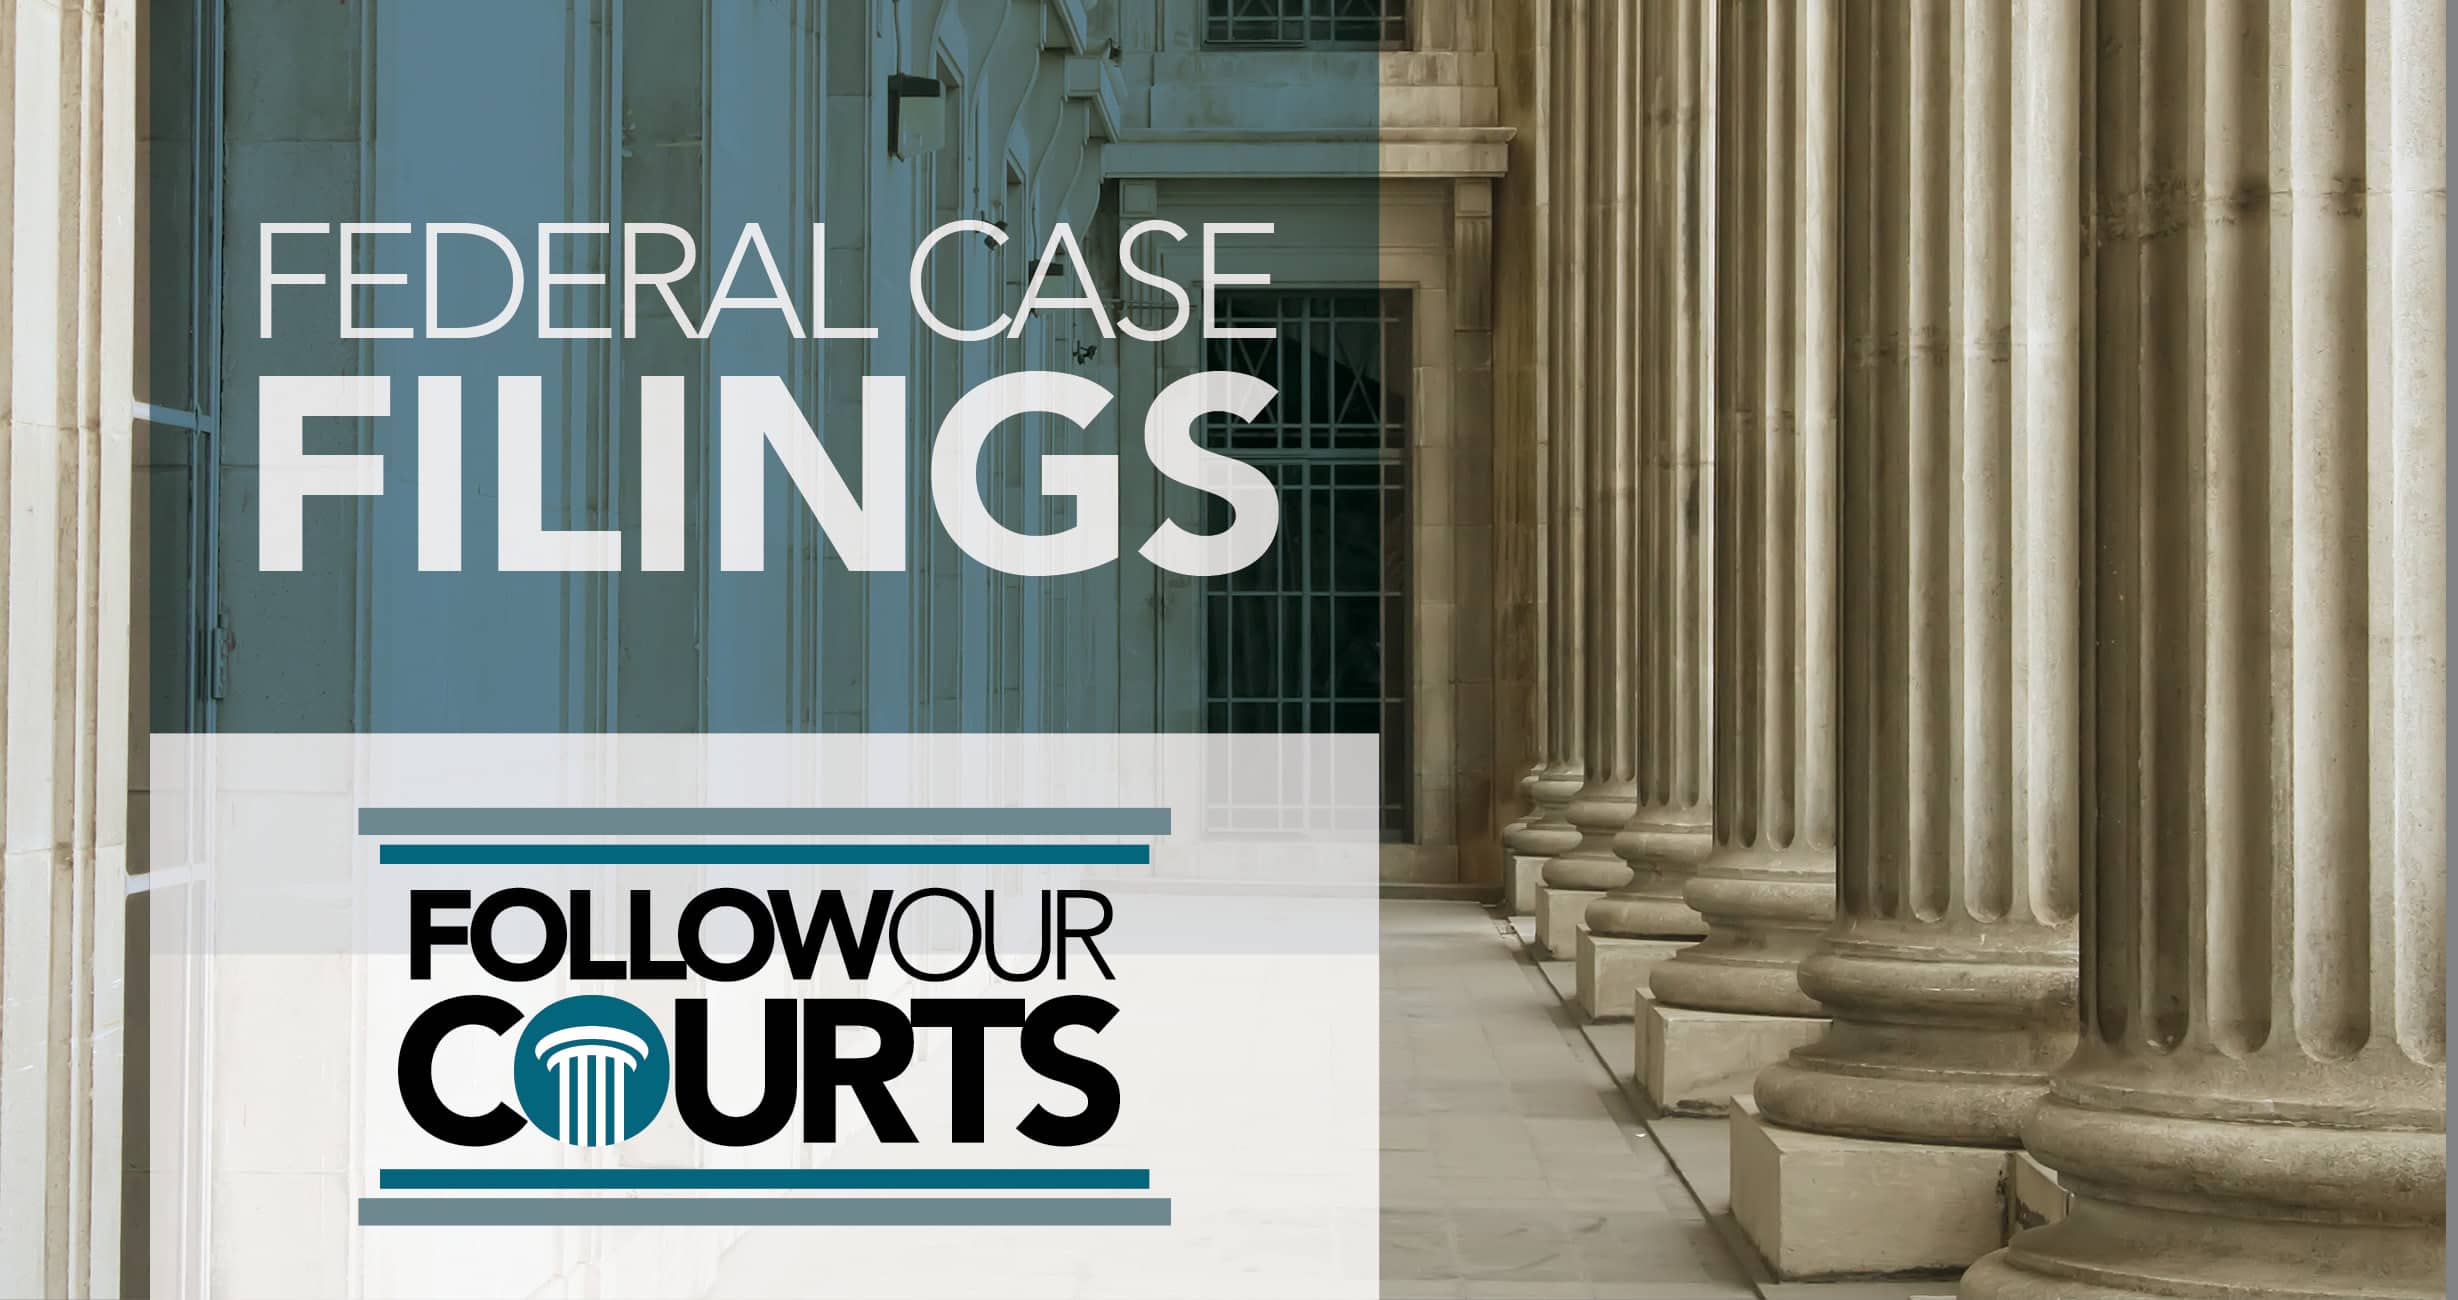 Filing roundup: court document filing procedure, jail deaths, ADA cases, Coachella trademark